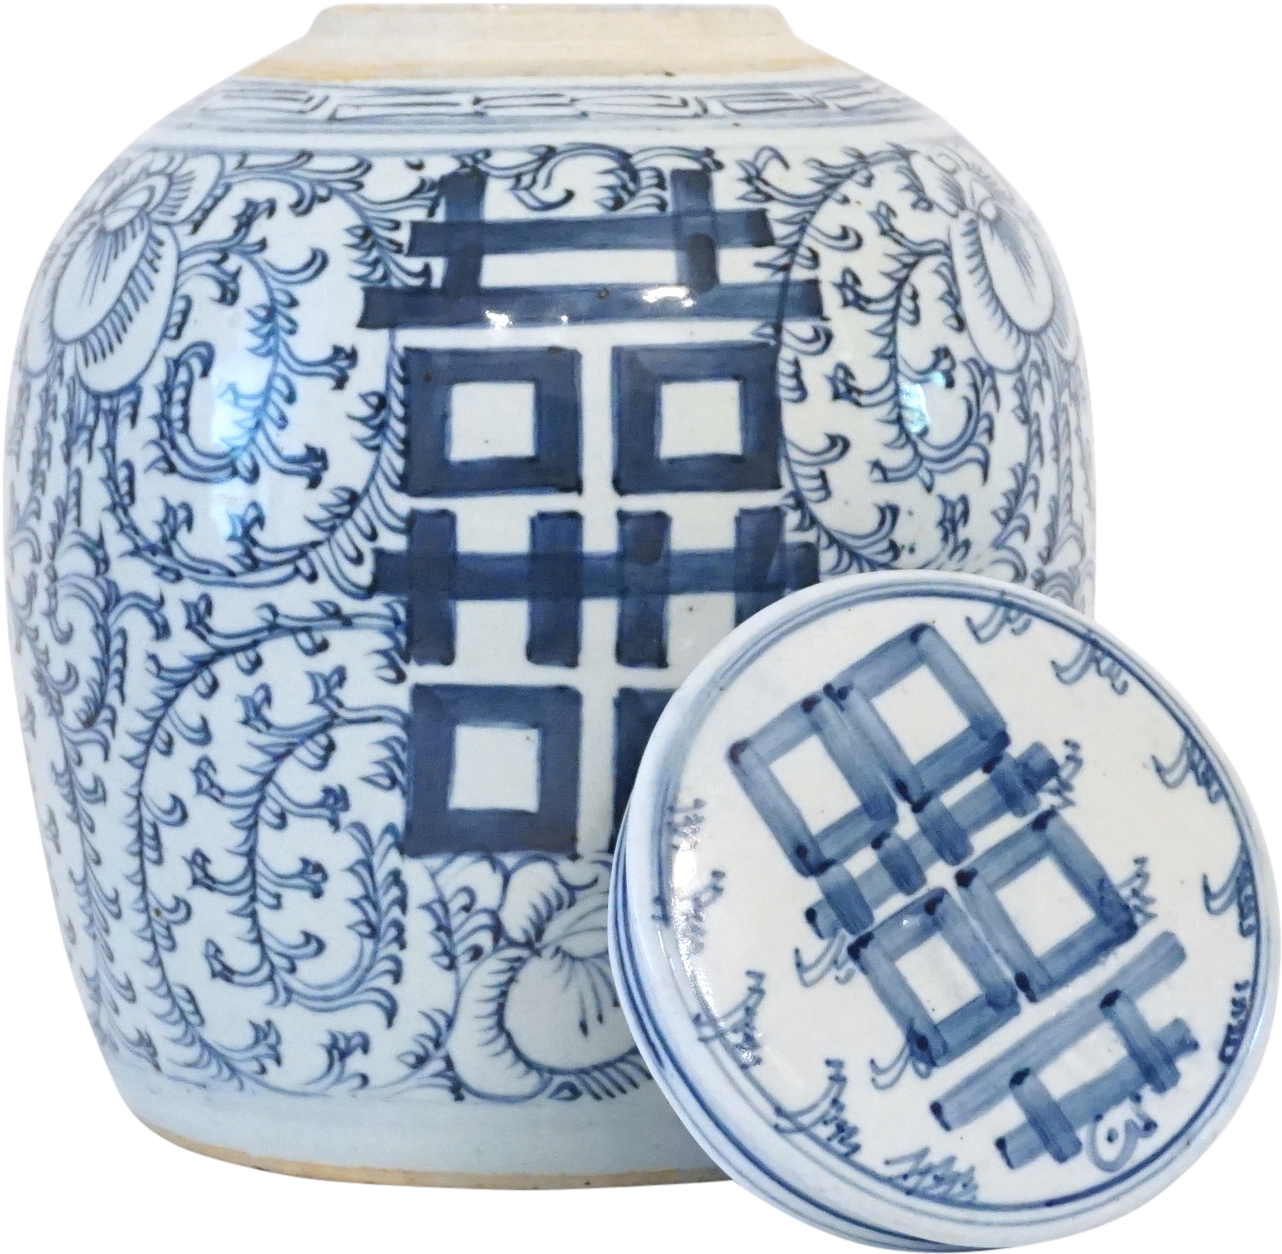 Doppelglücks-Keramikdose, blaues und weißes Porzellan